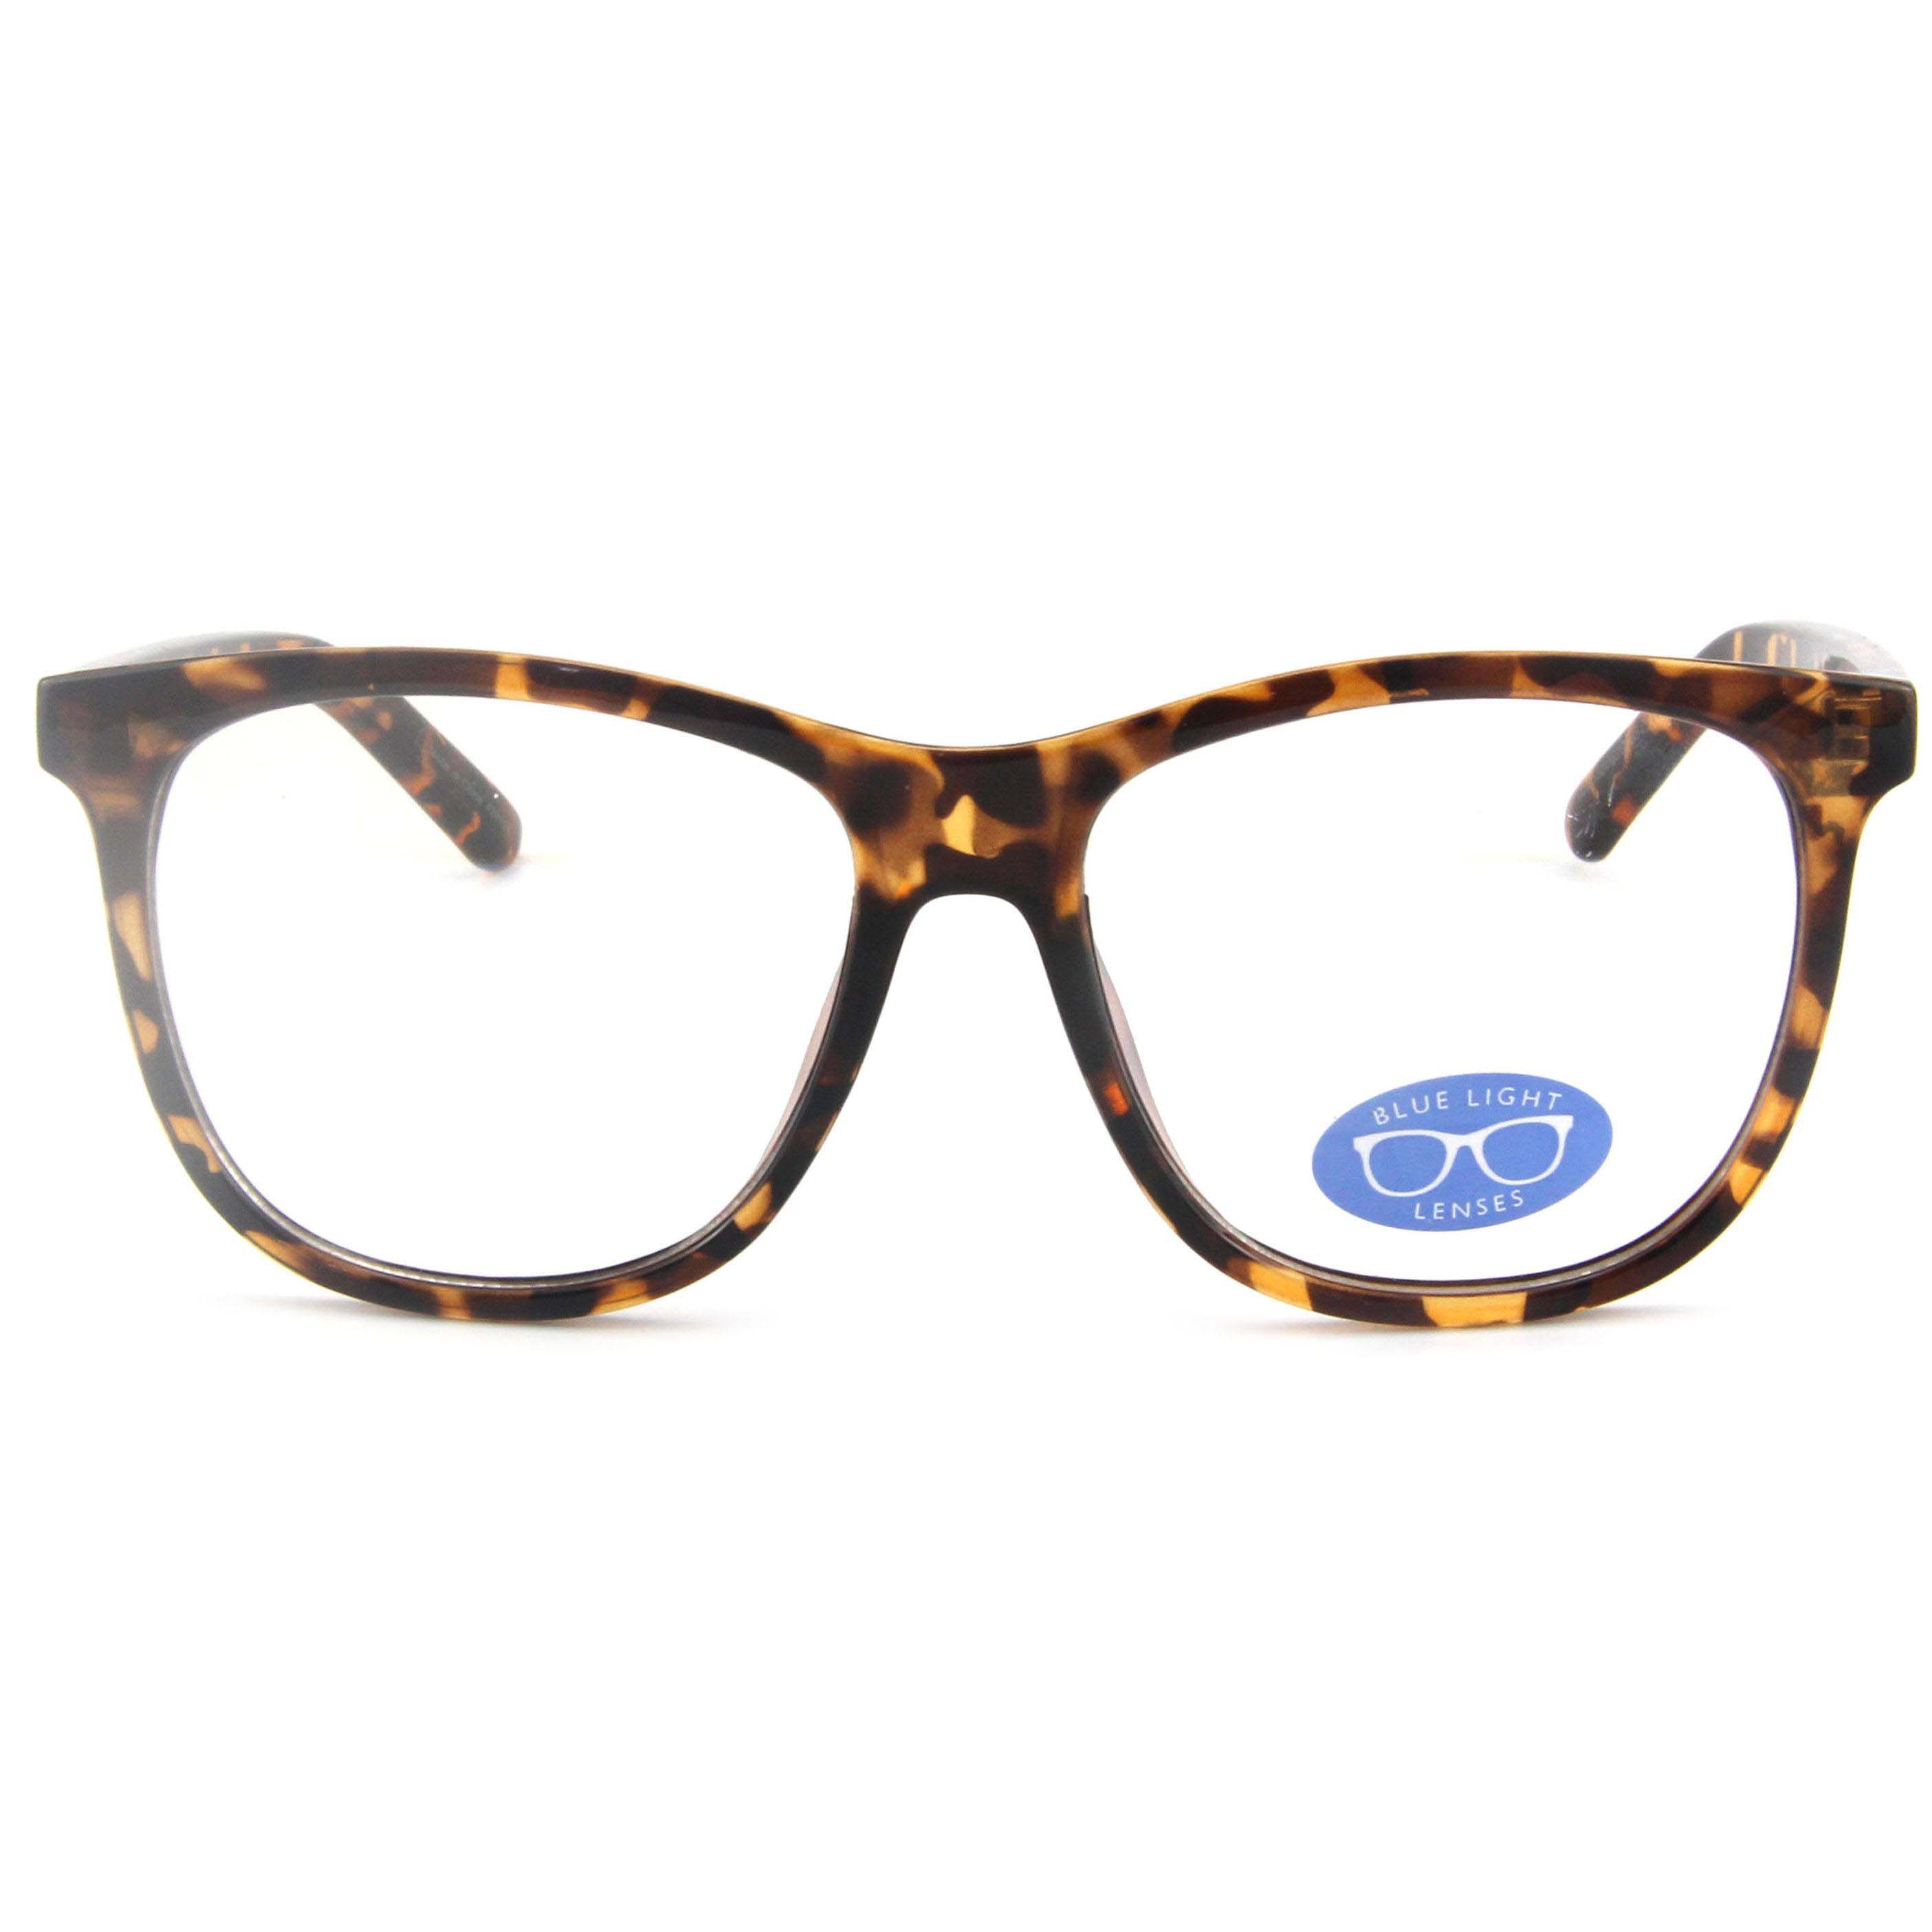 Eugenia fashion optical glasses modern design  For optical frame glasses-1